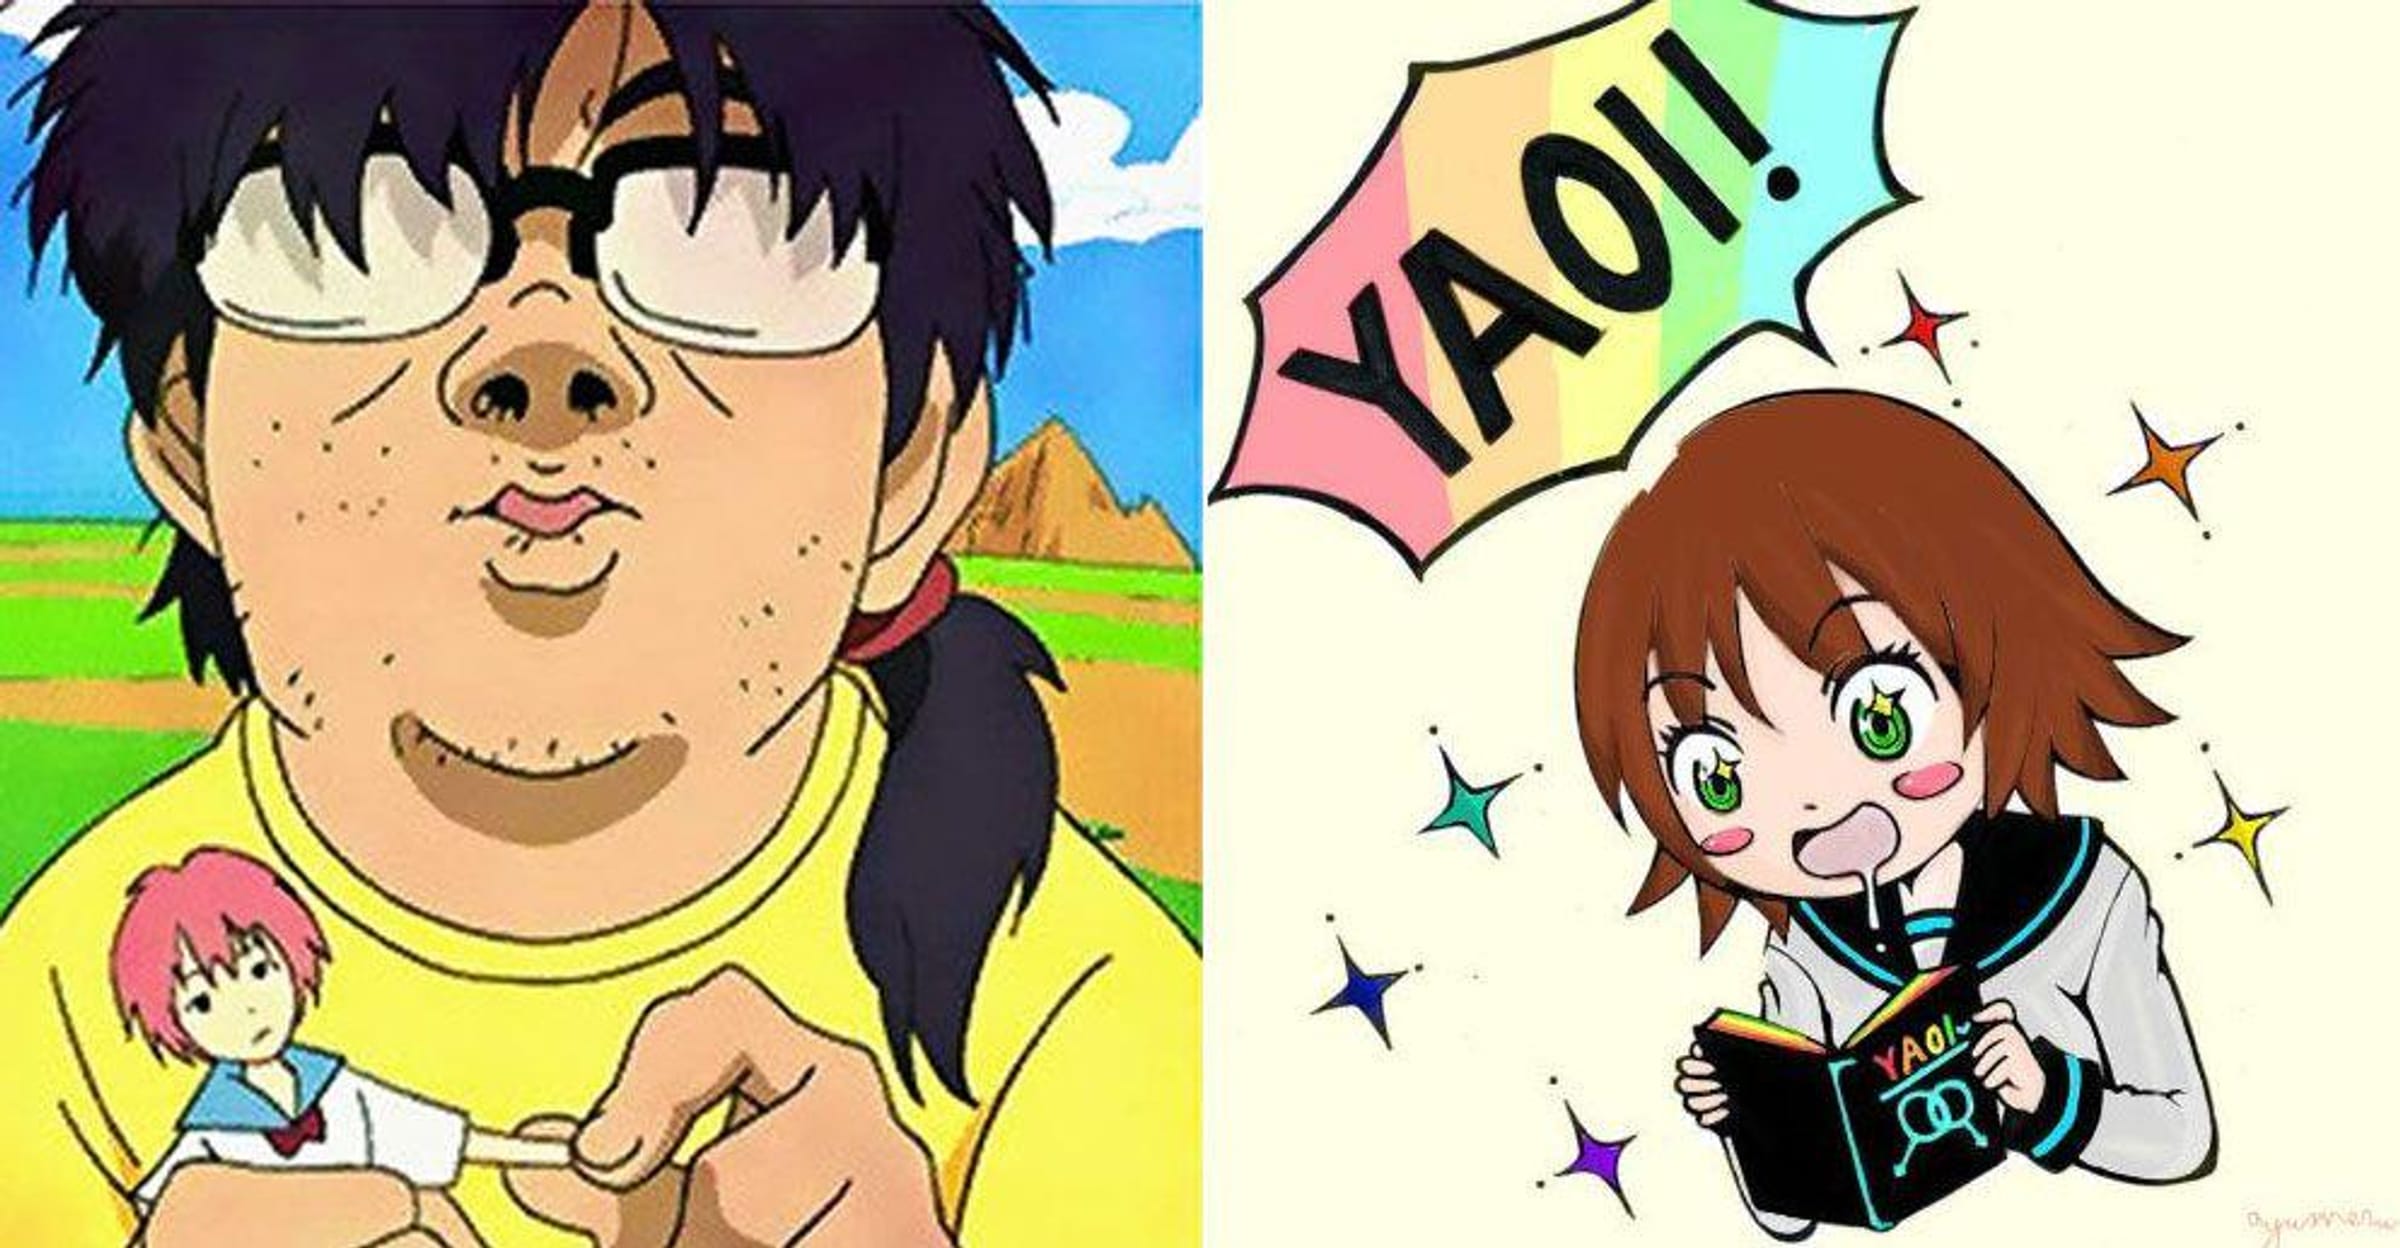 Haikyuu Manga Ends! - OtakuPlay PH: Anime, Cosplay and Pop Culture